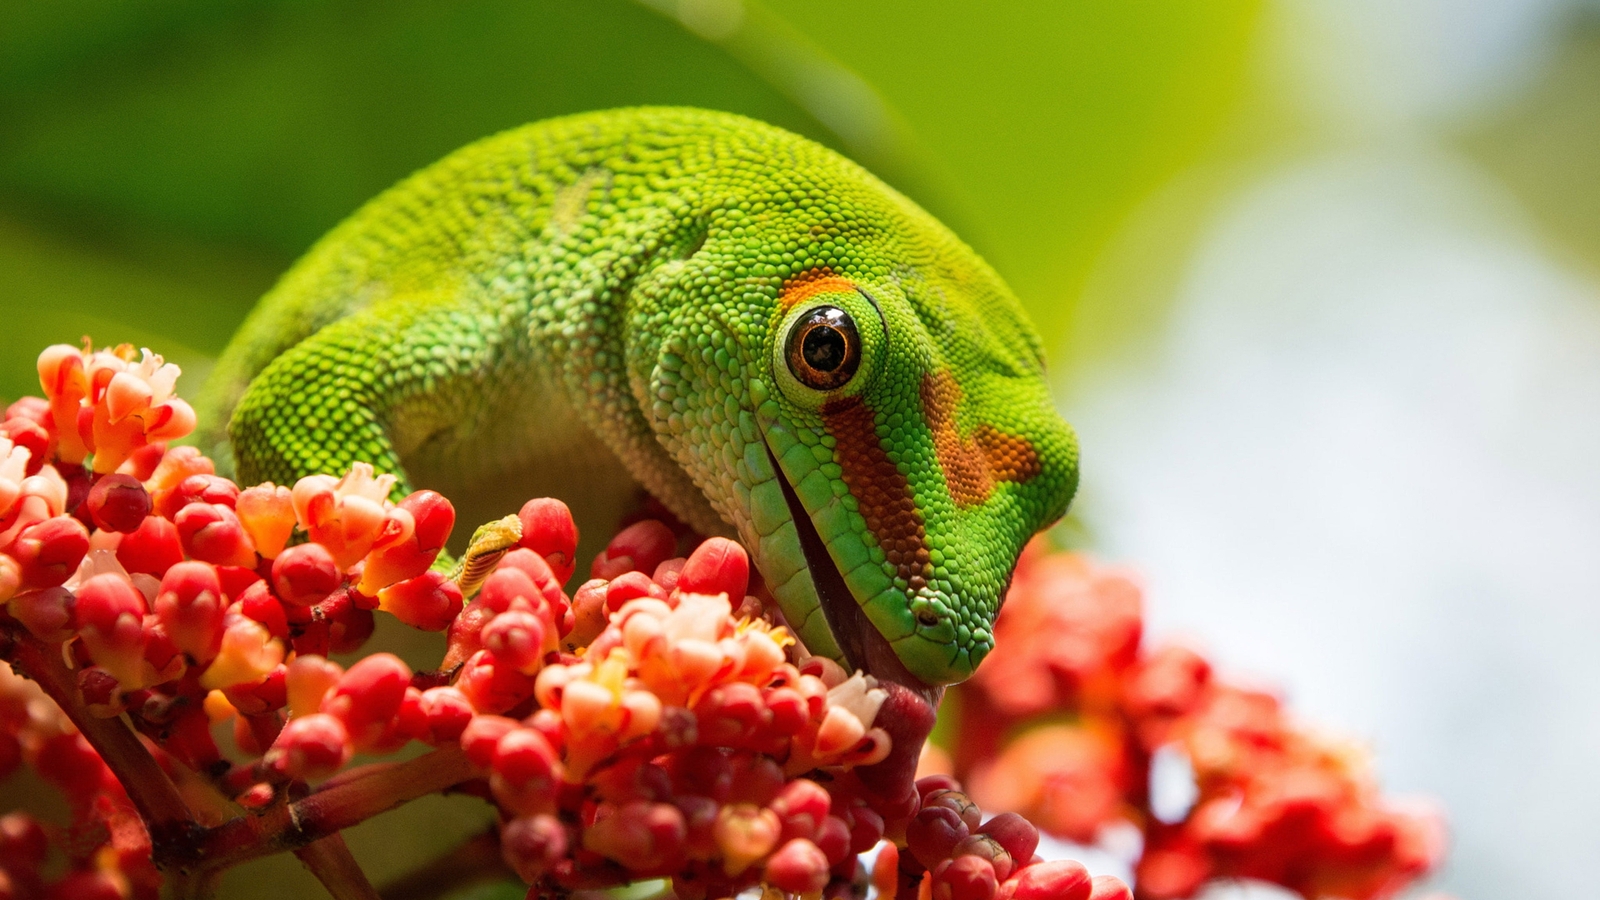 Image: Lizard, Gecko, felsum, eating, tongue, green